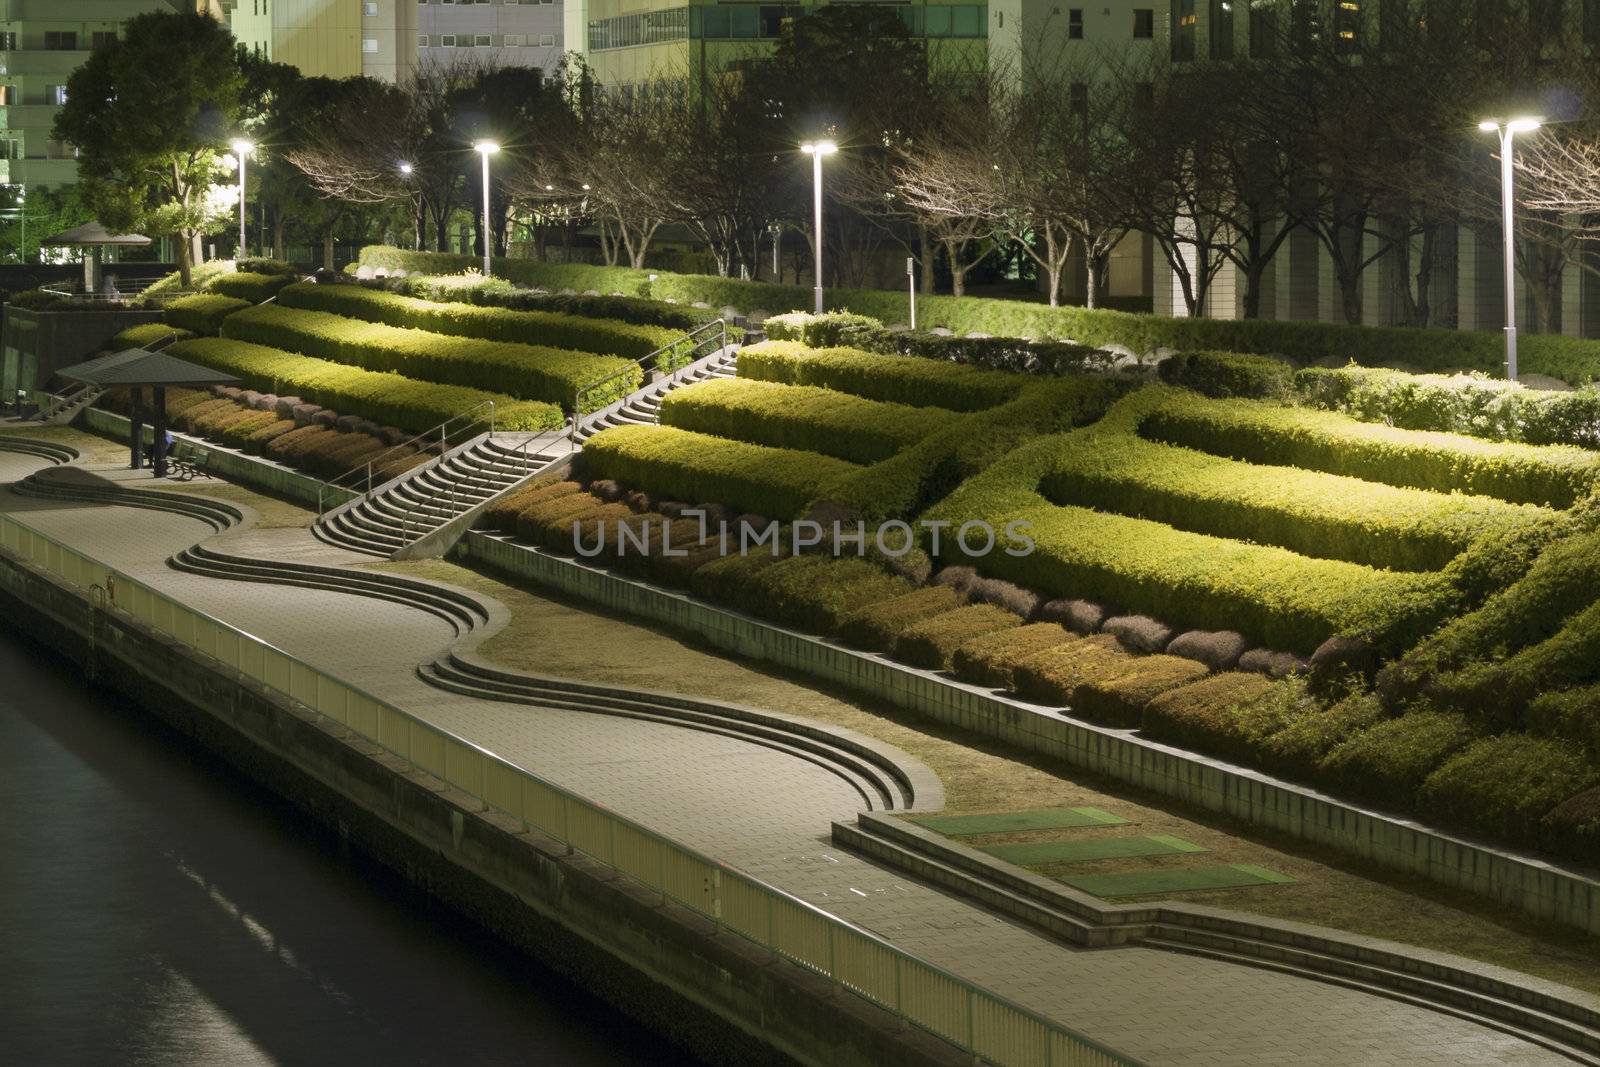 night terrace gardens in Tokyo city, Japan